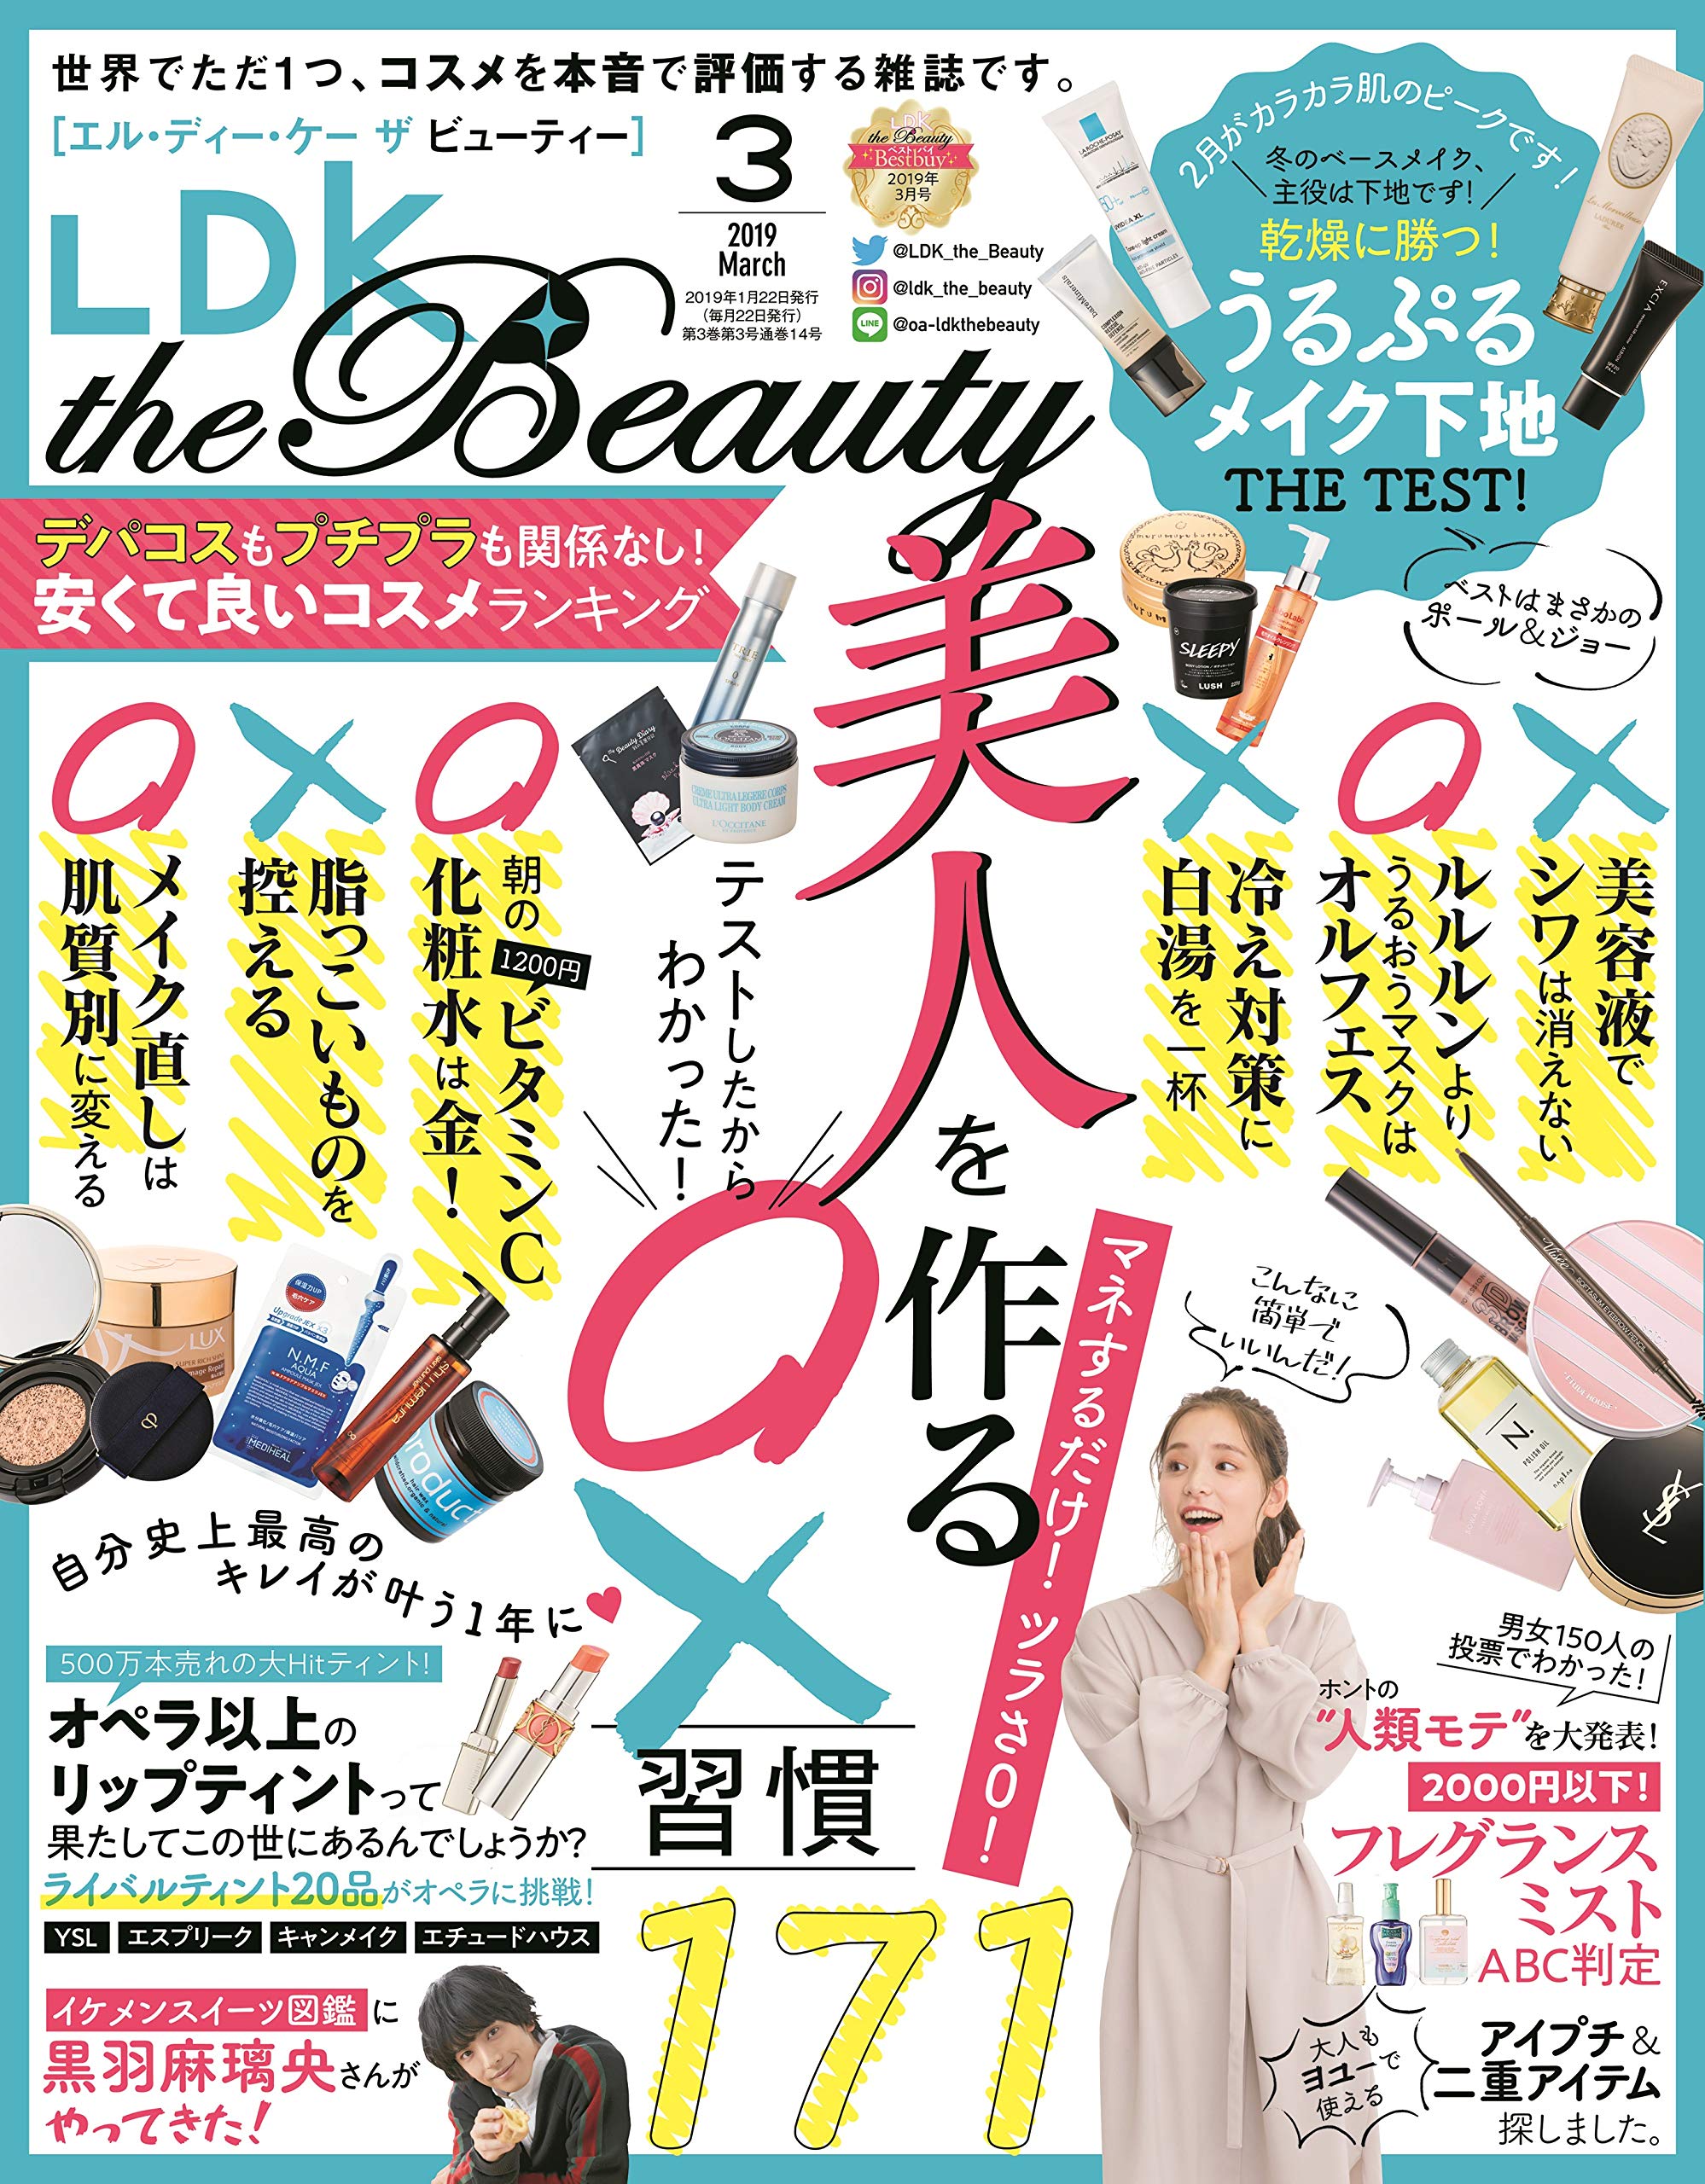 『LDK the Beauty 3月号』 「美人を作る習慣」を検証